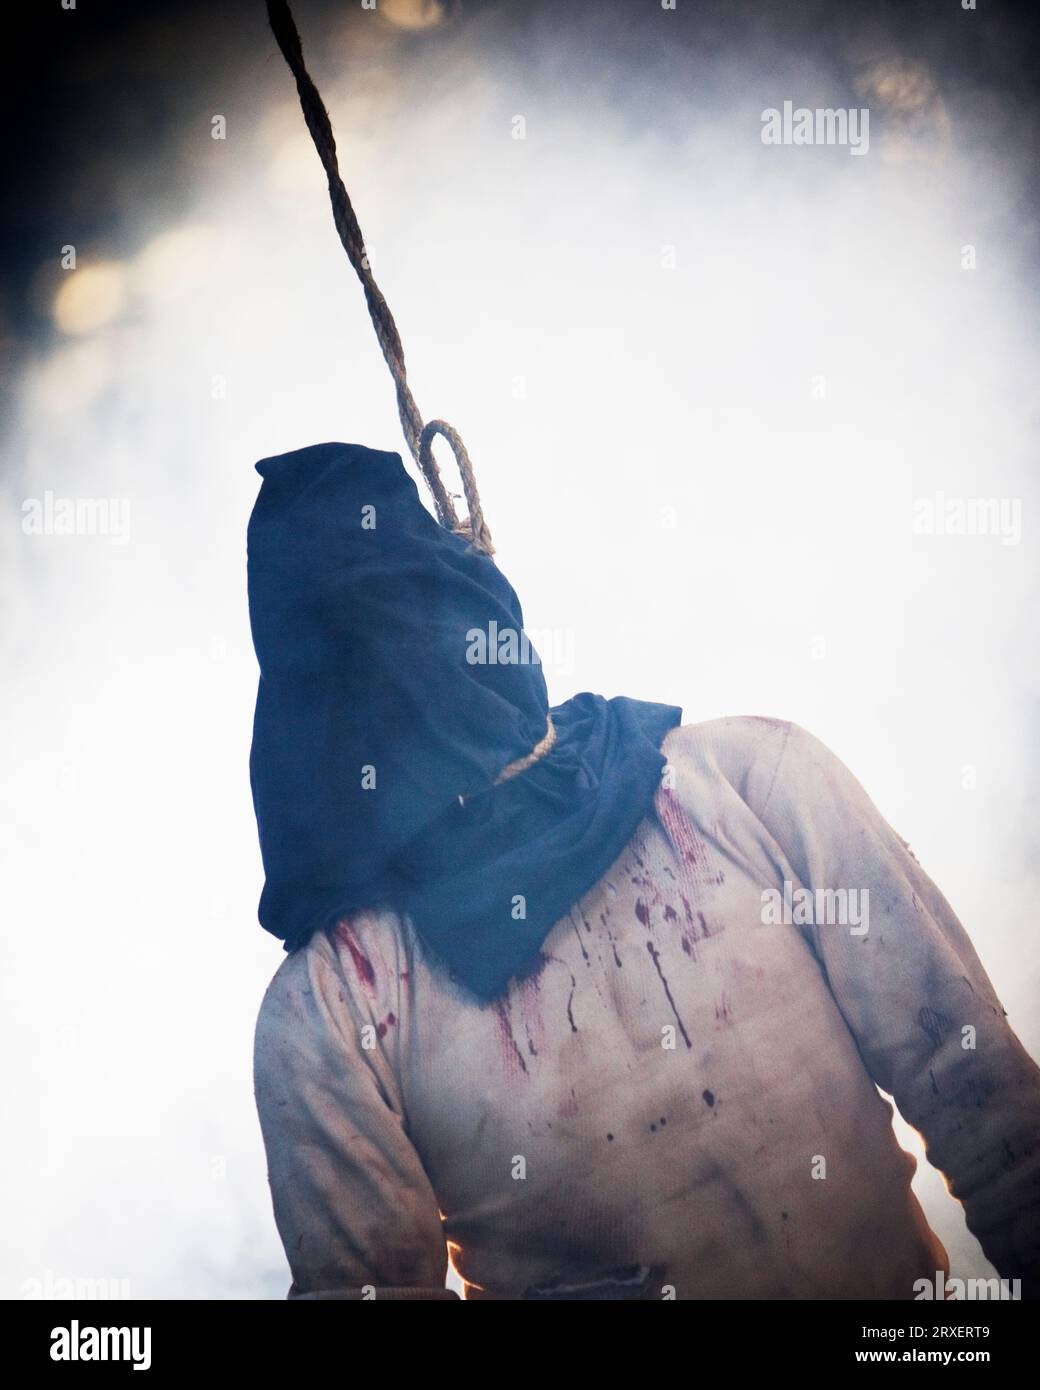 Hooded hanging man. Stock Photo